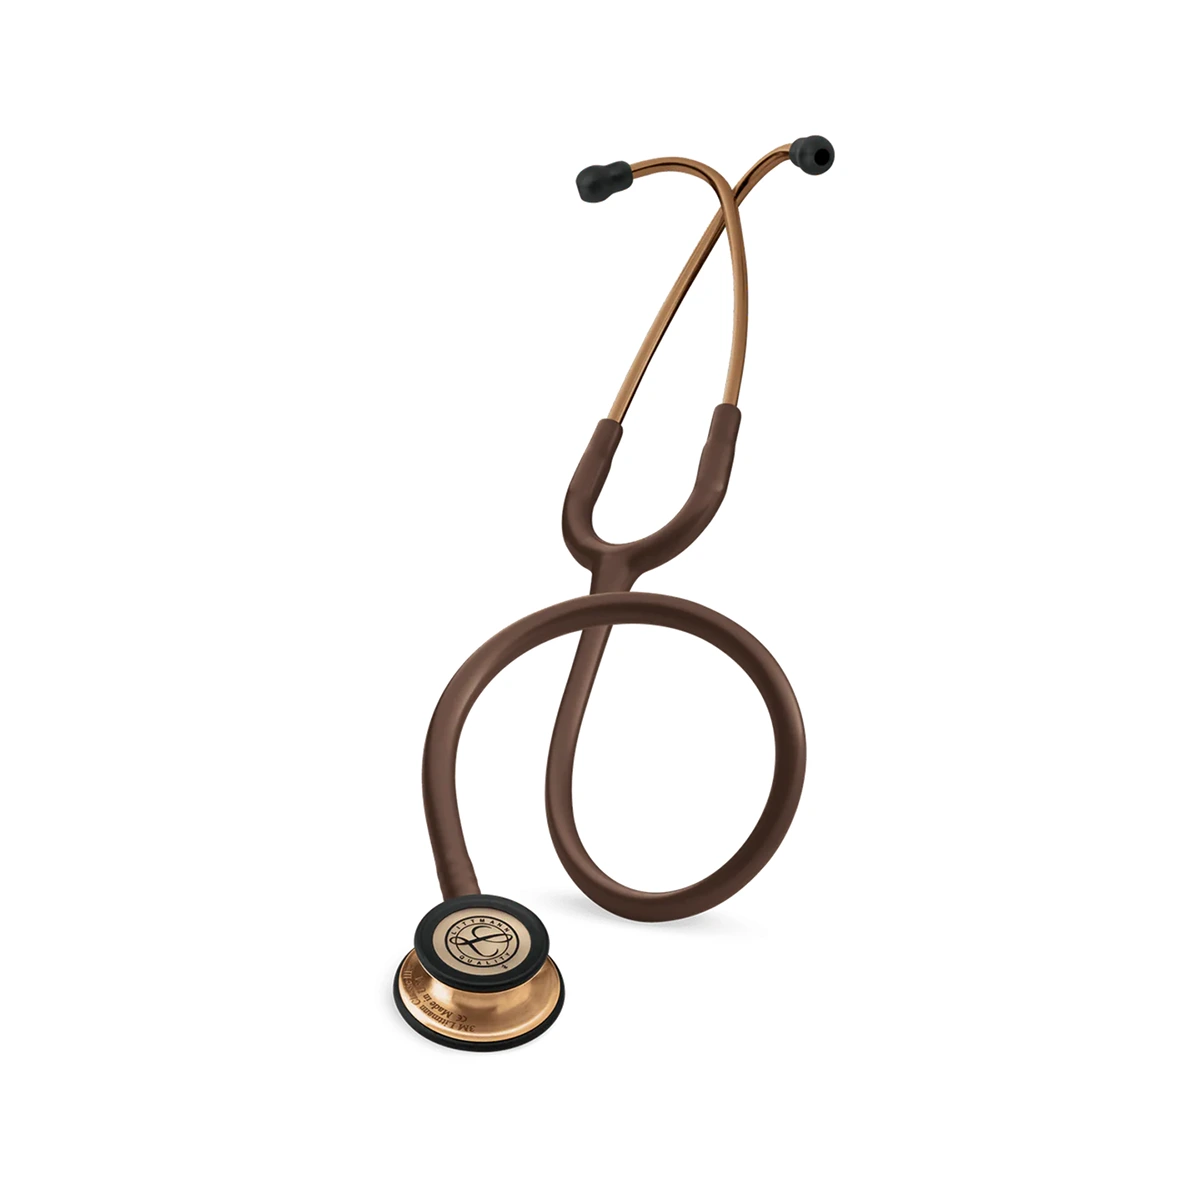 First product image of Littmann classic iii stethoscope 5809